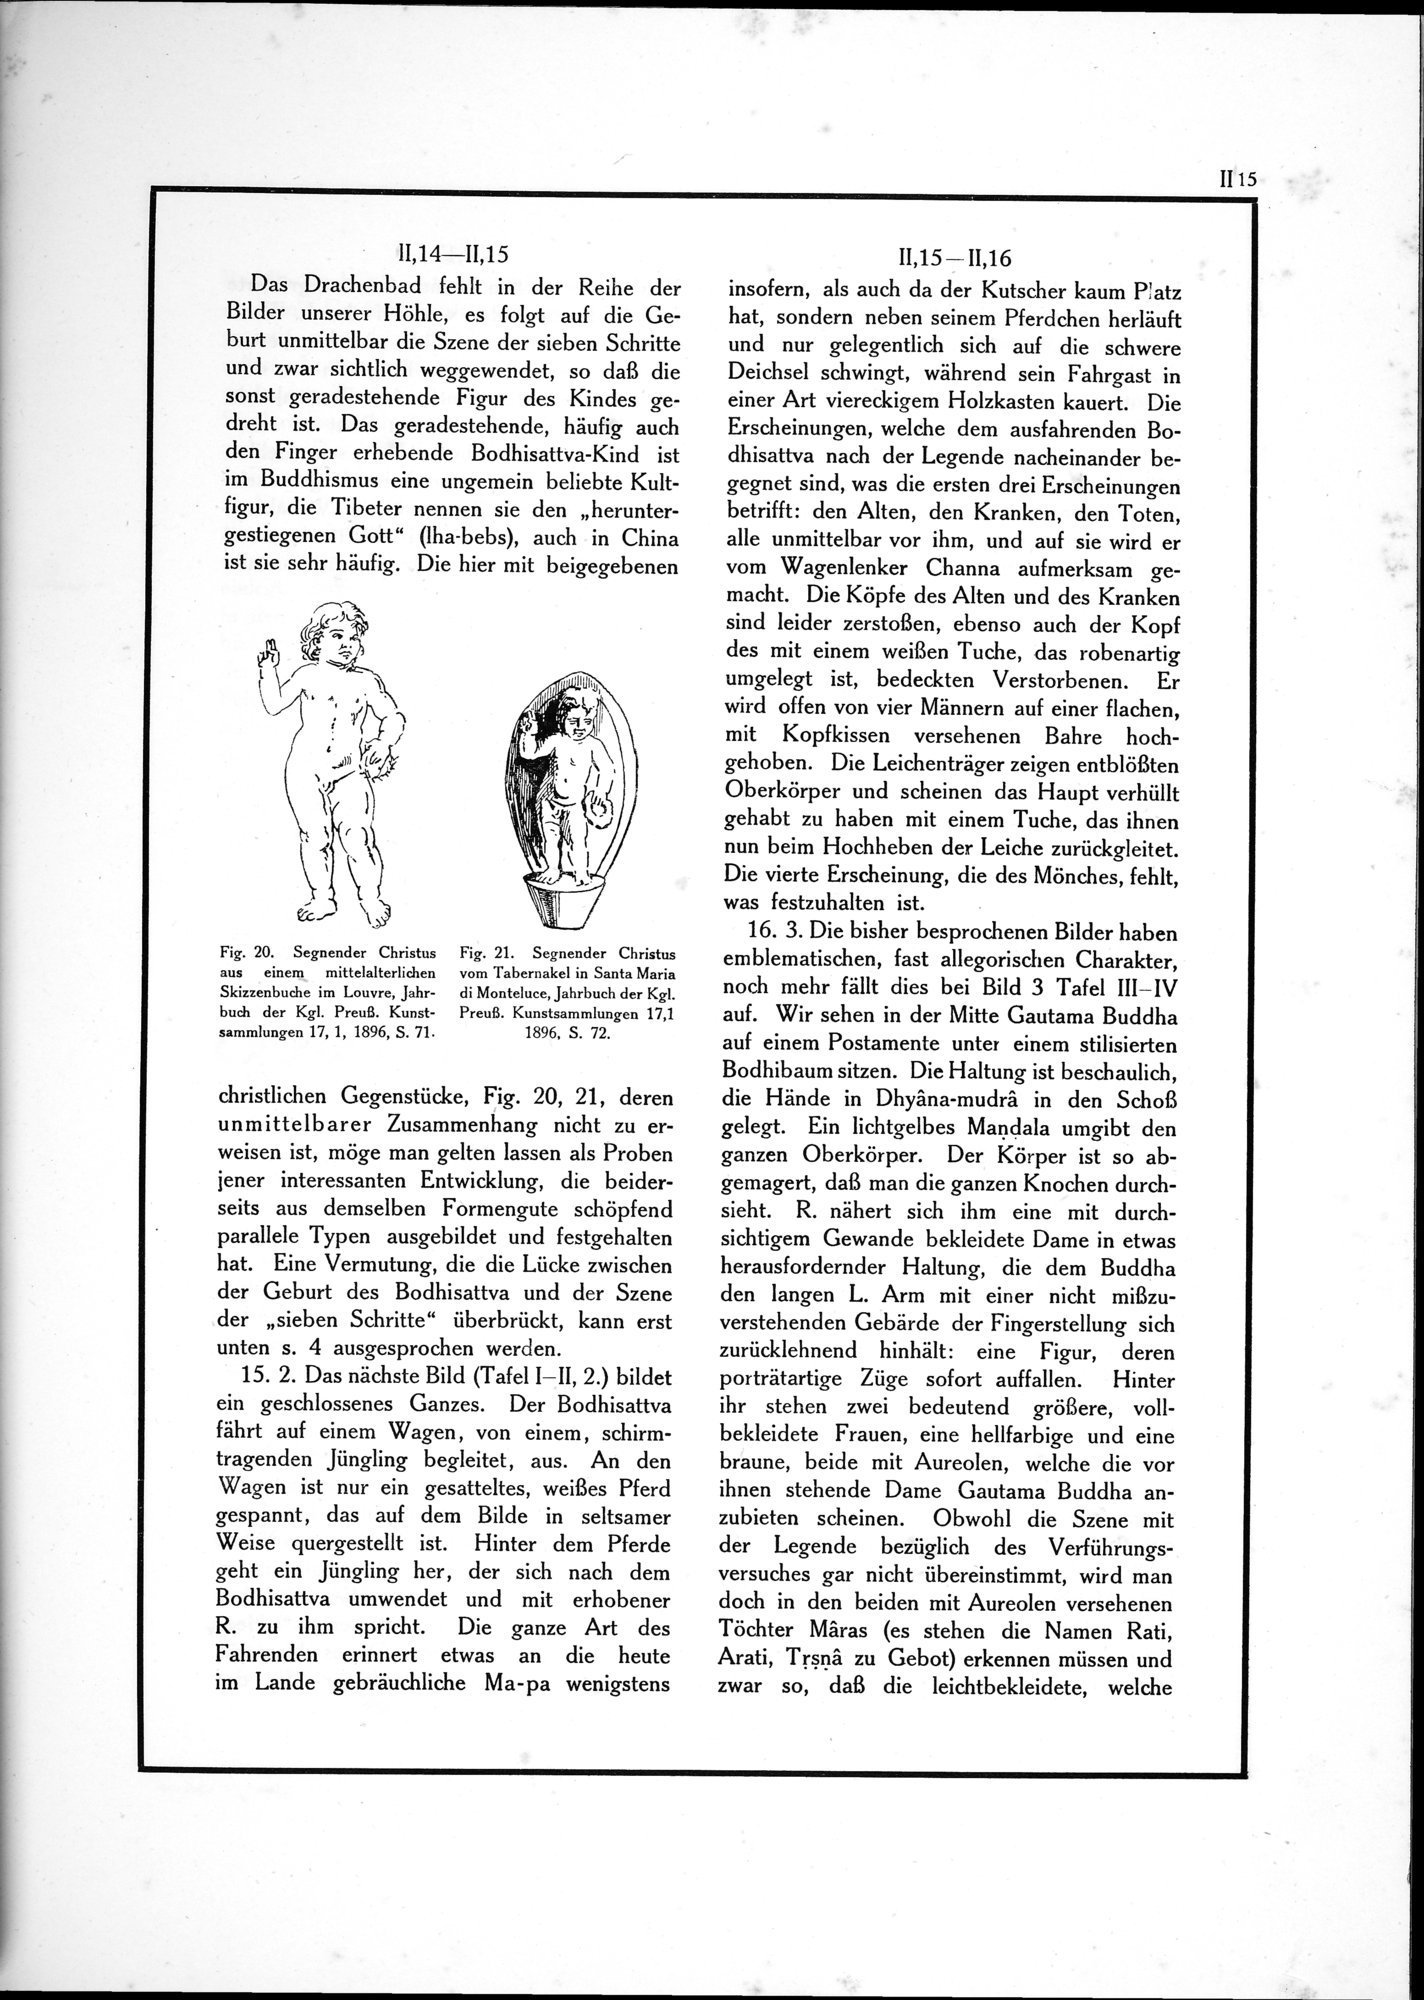 Alt-Kutscha : vol.1 / Page 121 (Grayscale High Resolution Image)